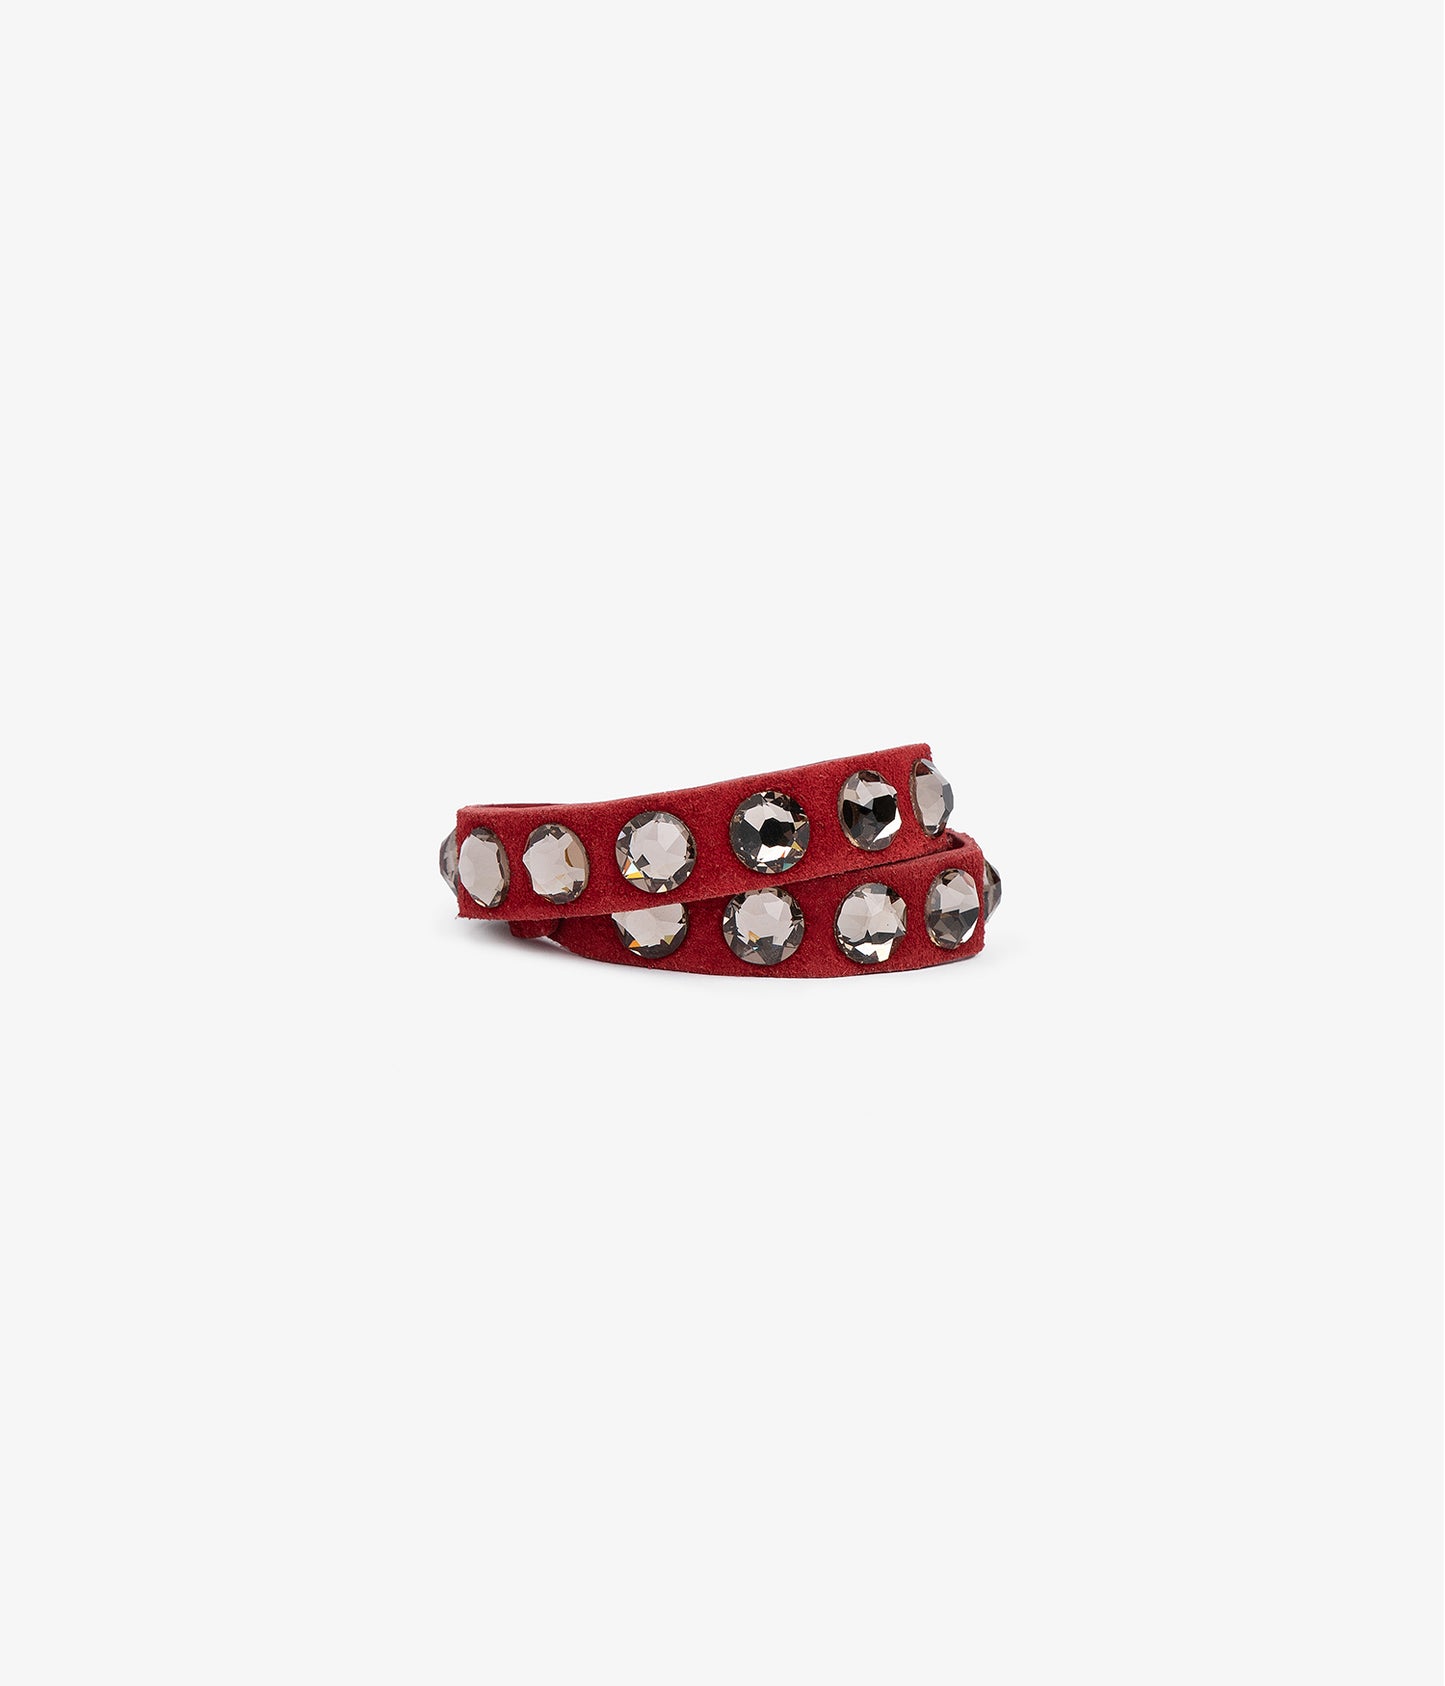 wrap bracelet / poppy castoro